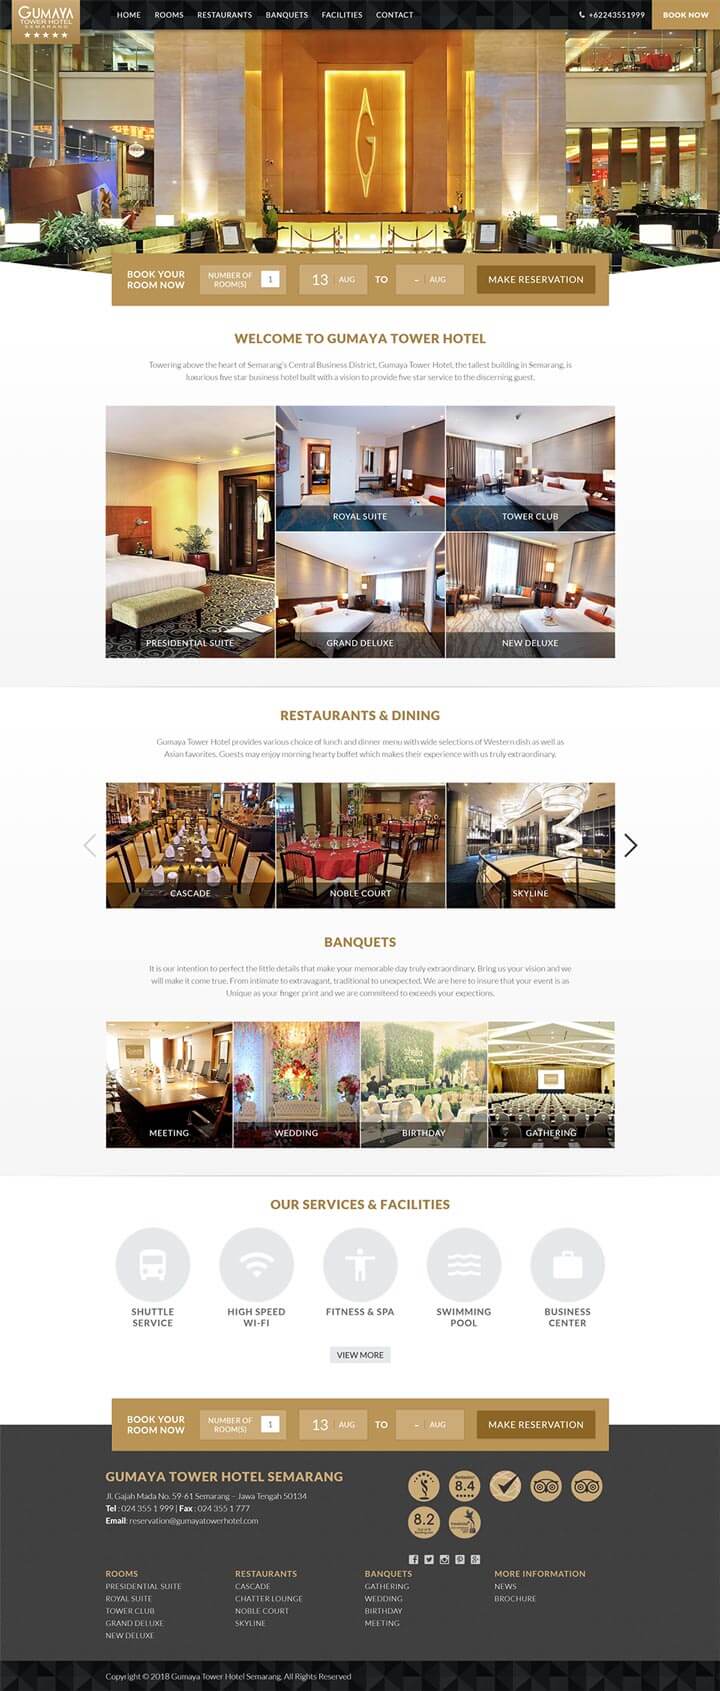 Gumaya Tower Hotel (2015) Website Screenshot